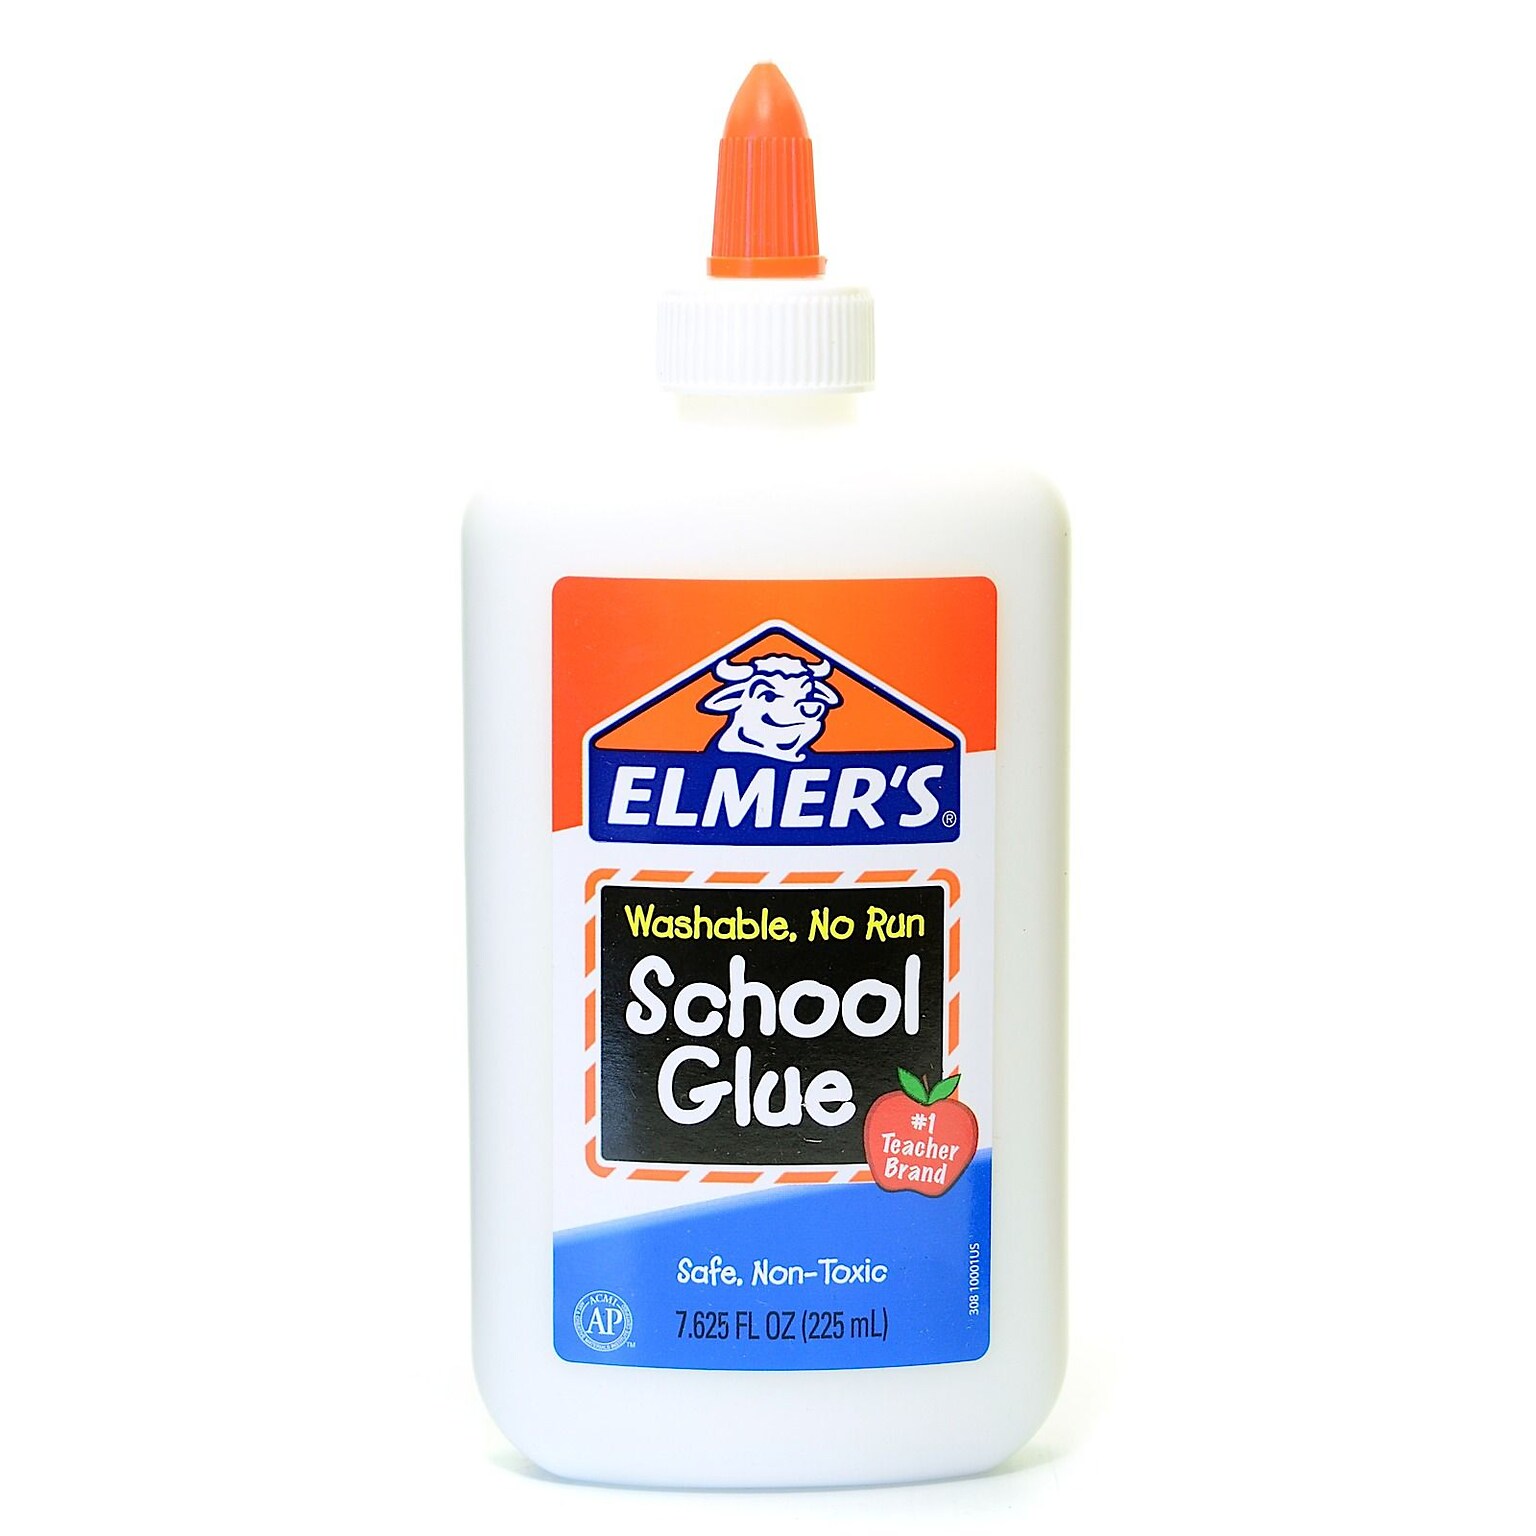 Elmers WashableRemovable School Glue, 8 oz., White, 8/Pack (35591-PK8)